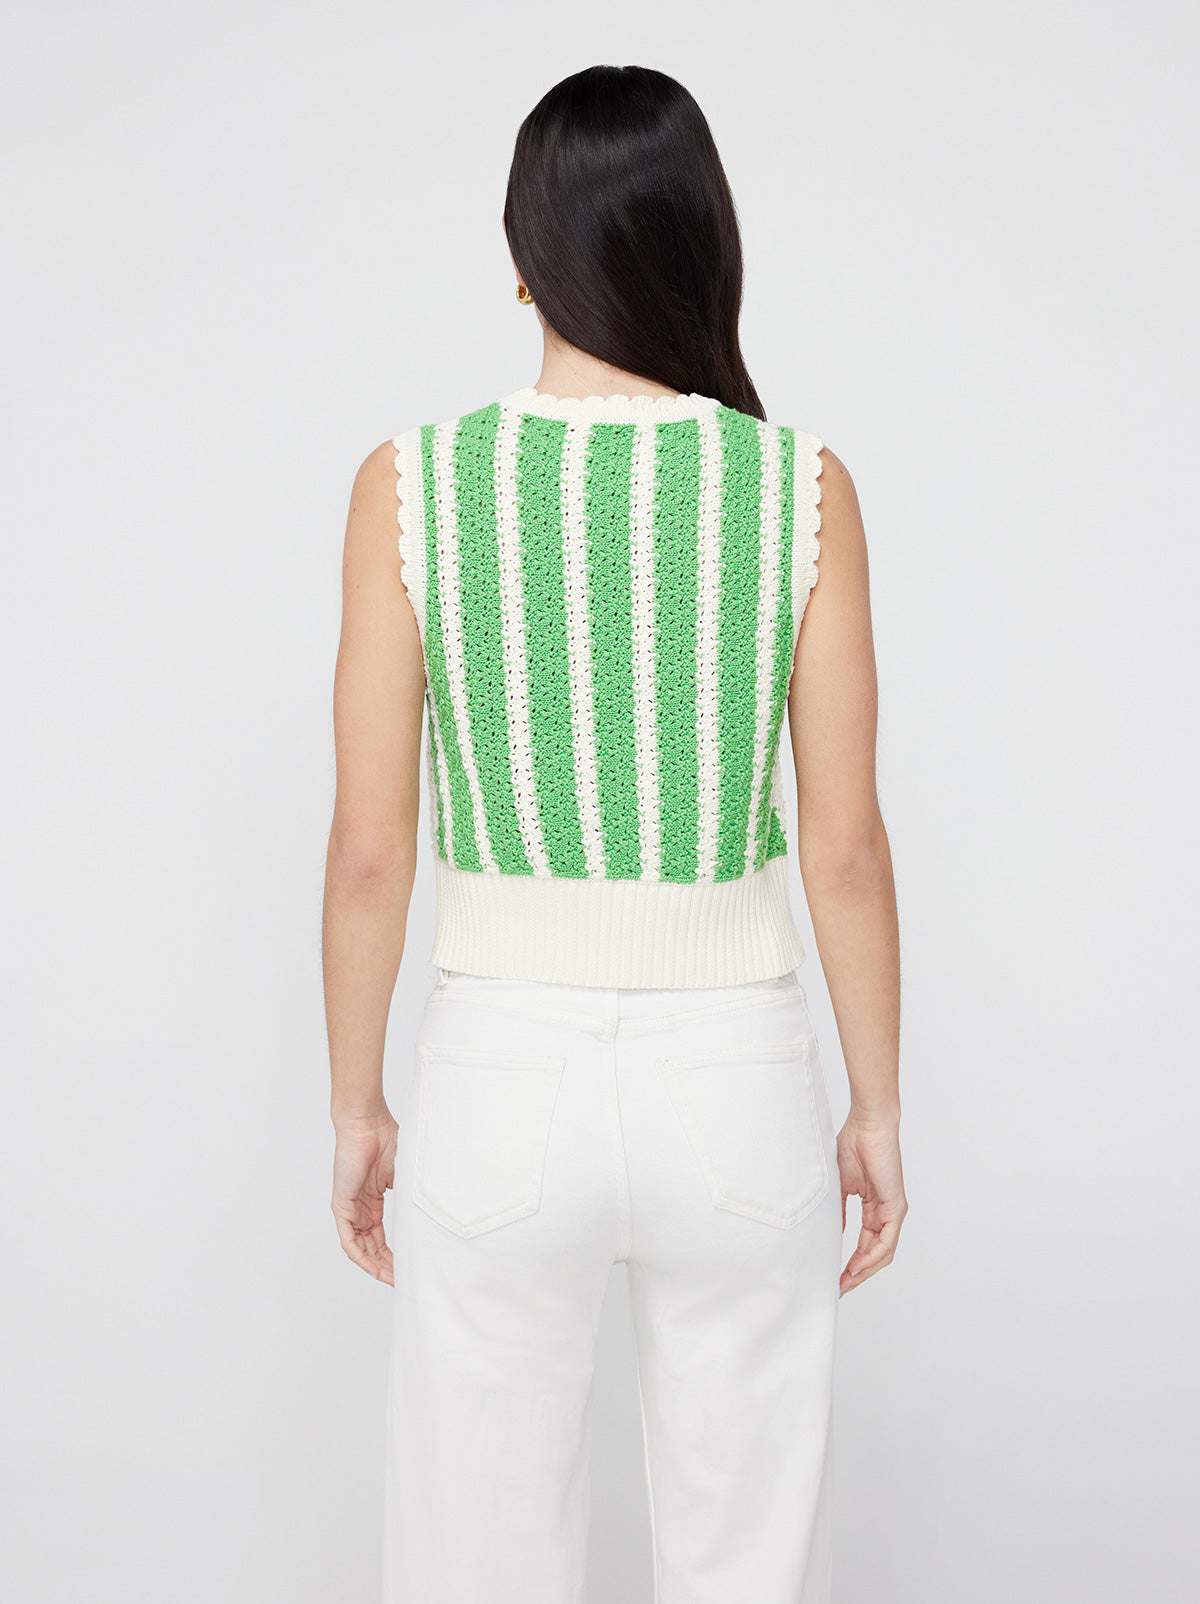 Marley Green Stripe Knit Top By KITRI Studio